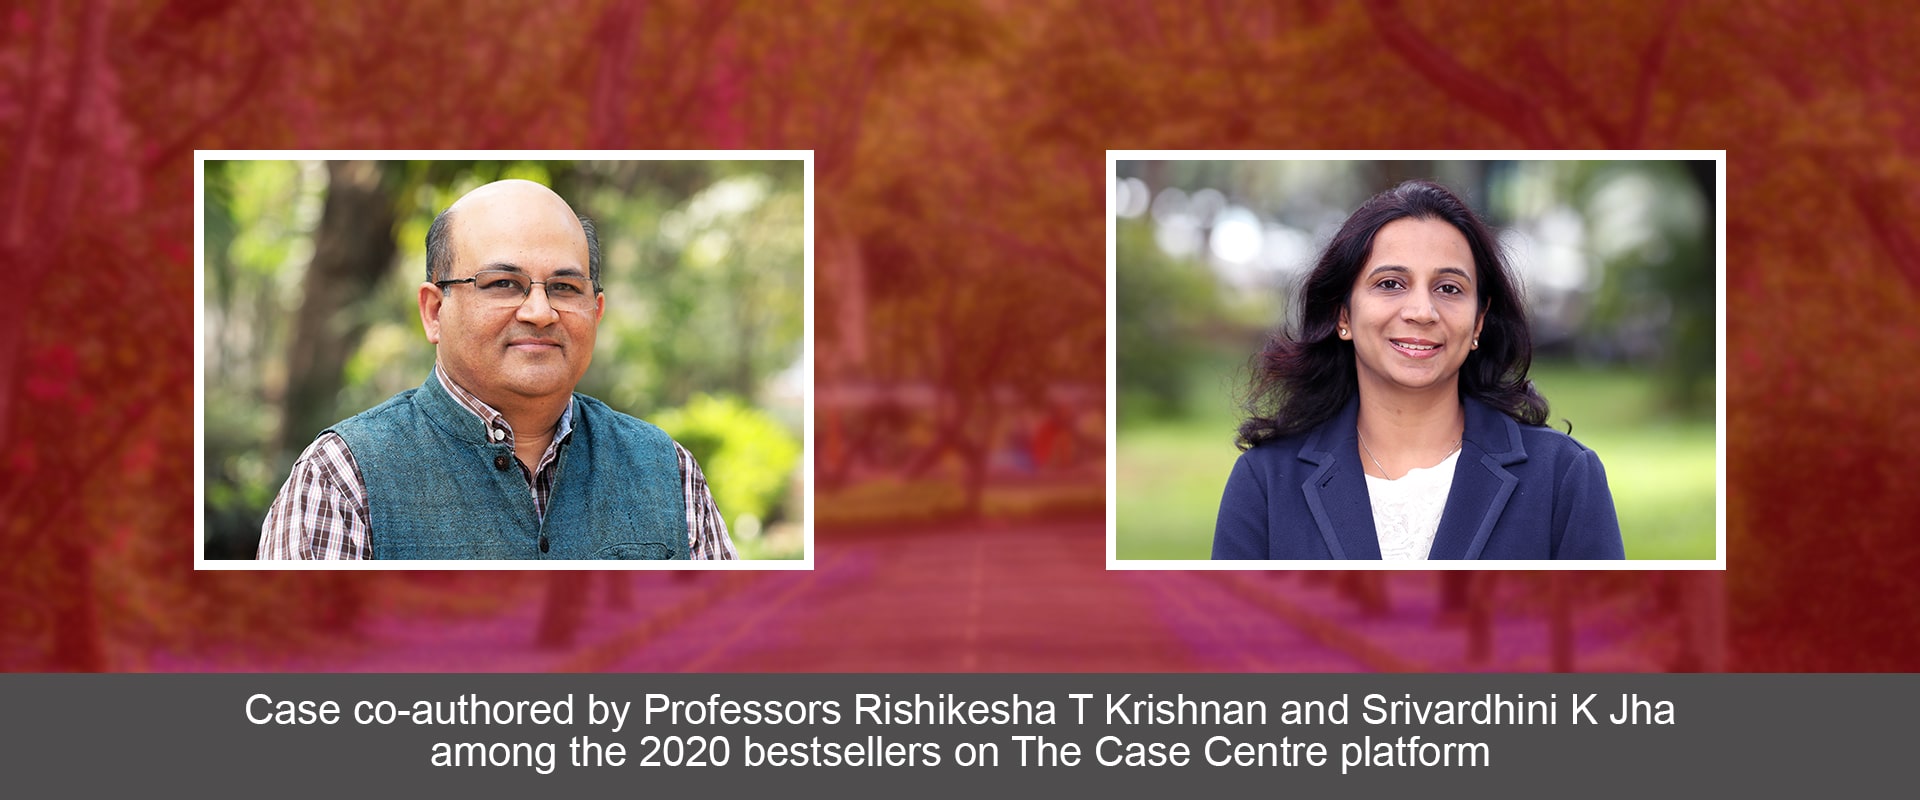 Case co-authored by Professors Rishikesha T Krishnan and Srivardhini K Jha among the 2020 bestsellers on The Case Centre platform